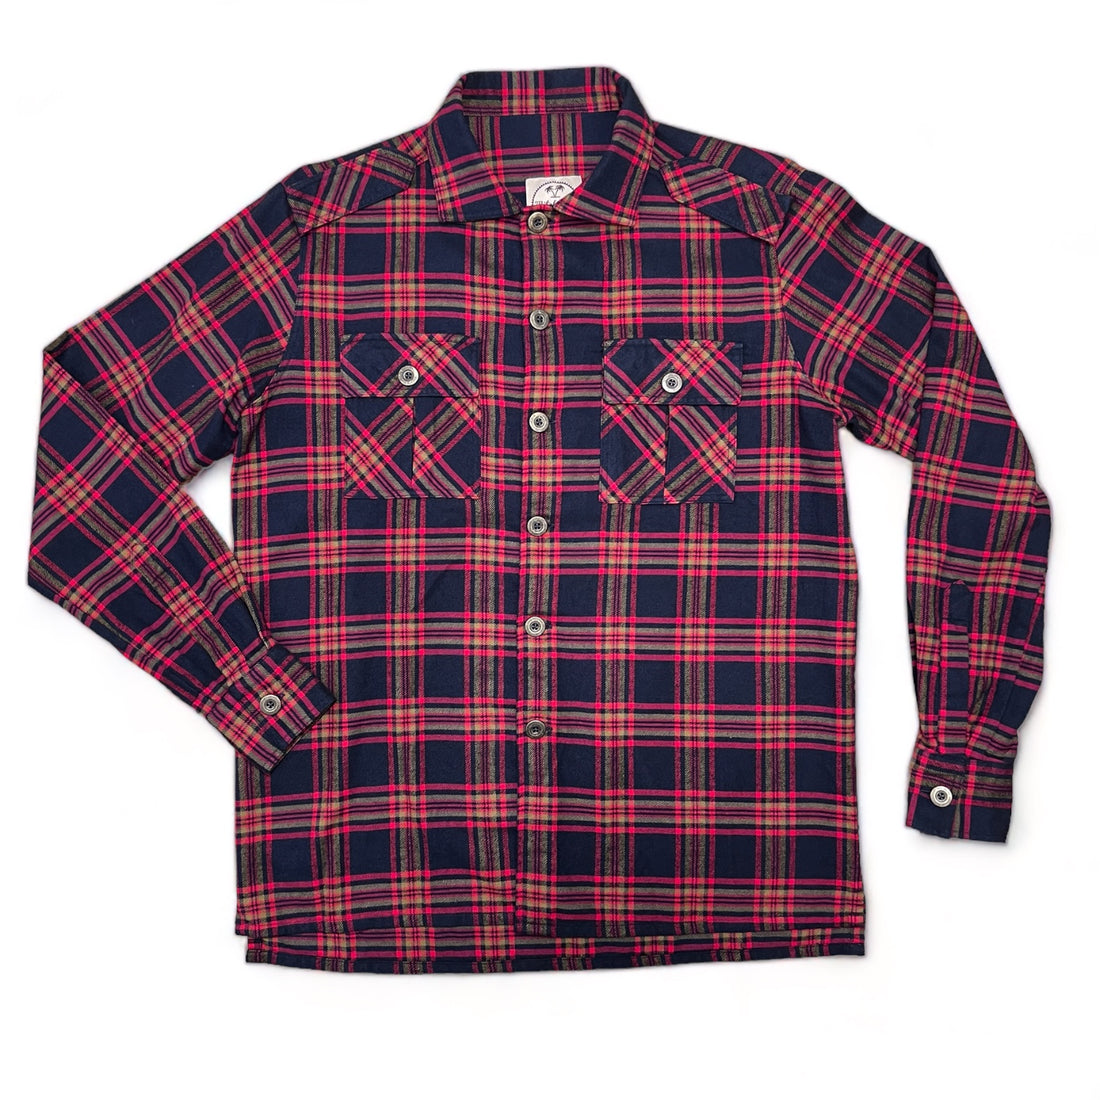 Navy & red tartan flannel cotton overshirt